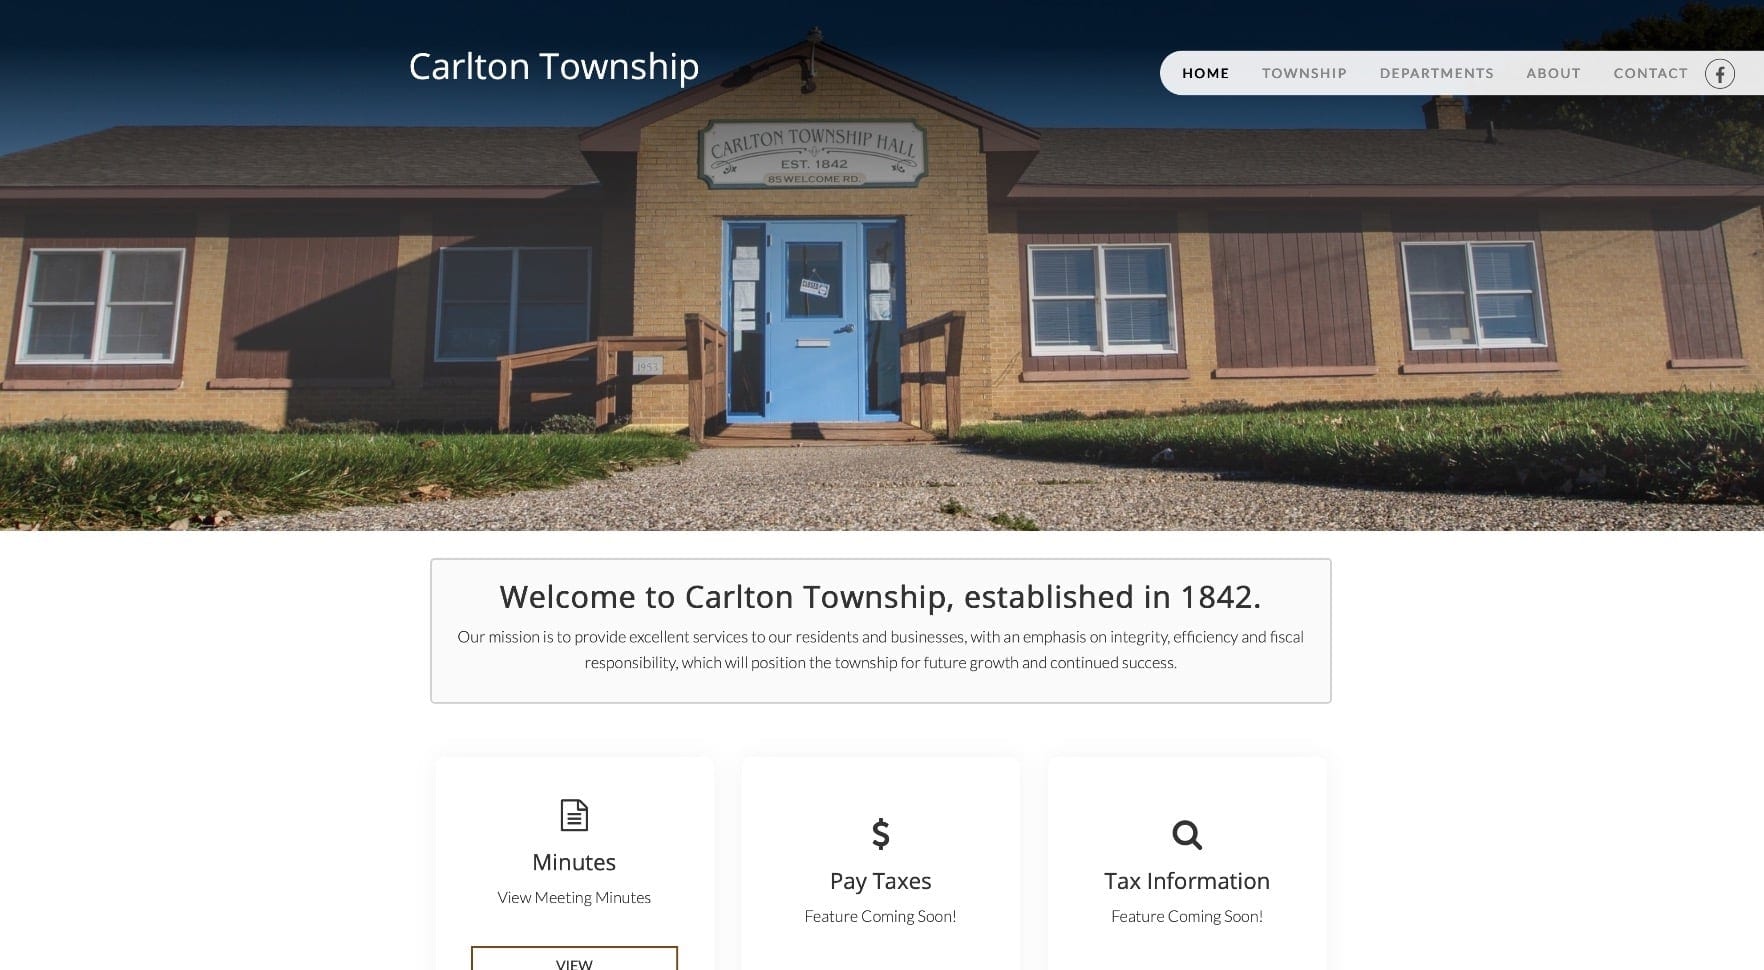 Carlton Township in Hastings MI